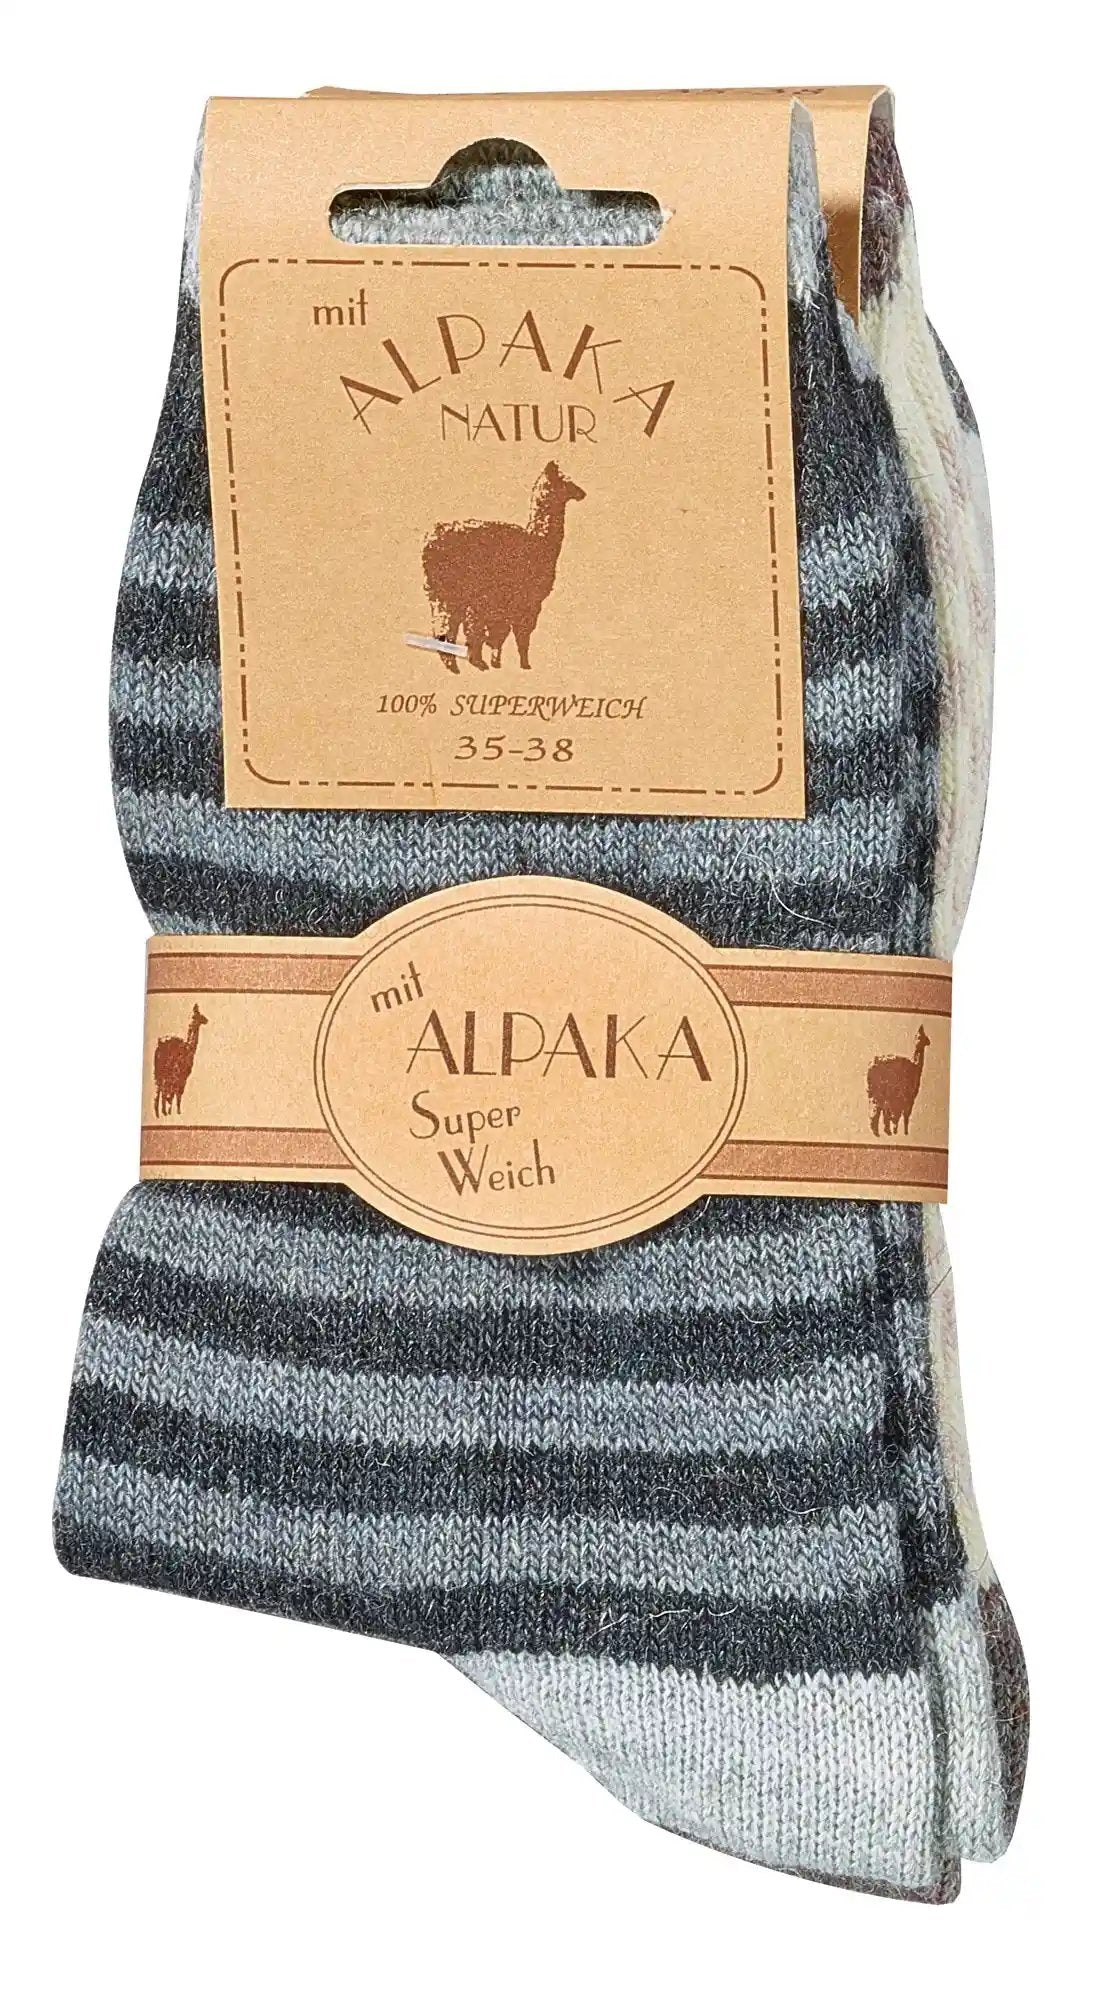 2 Paar Alpaka Söckchen Socken mit Alpakawolle für Kinder, Teenager, Damen